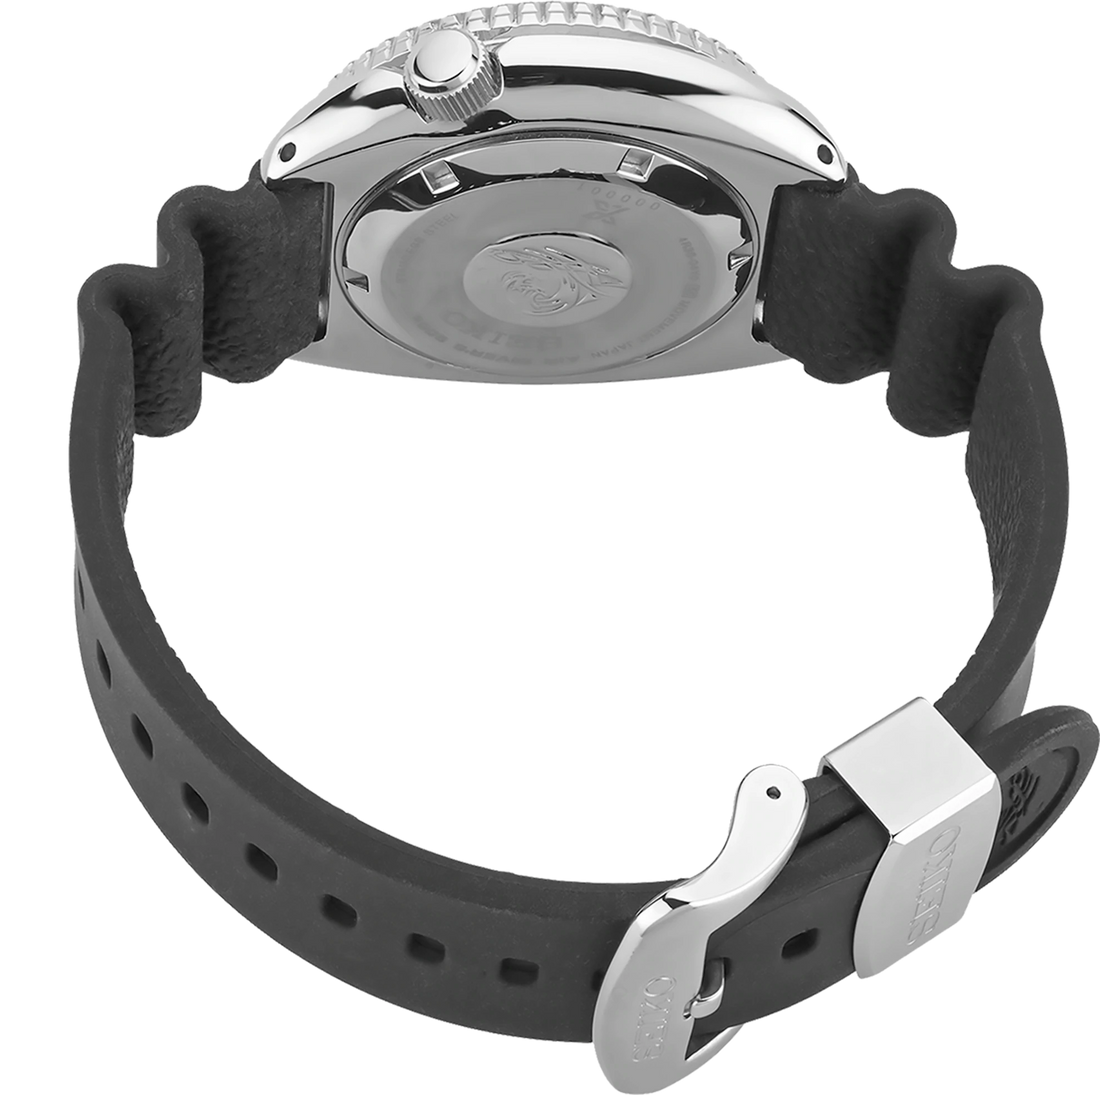 Seiko Prospex SRPE93 Black Dial Rubber Strap Turtle Diver Watch | Skeie's  Jewelers